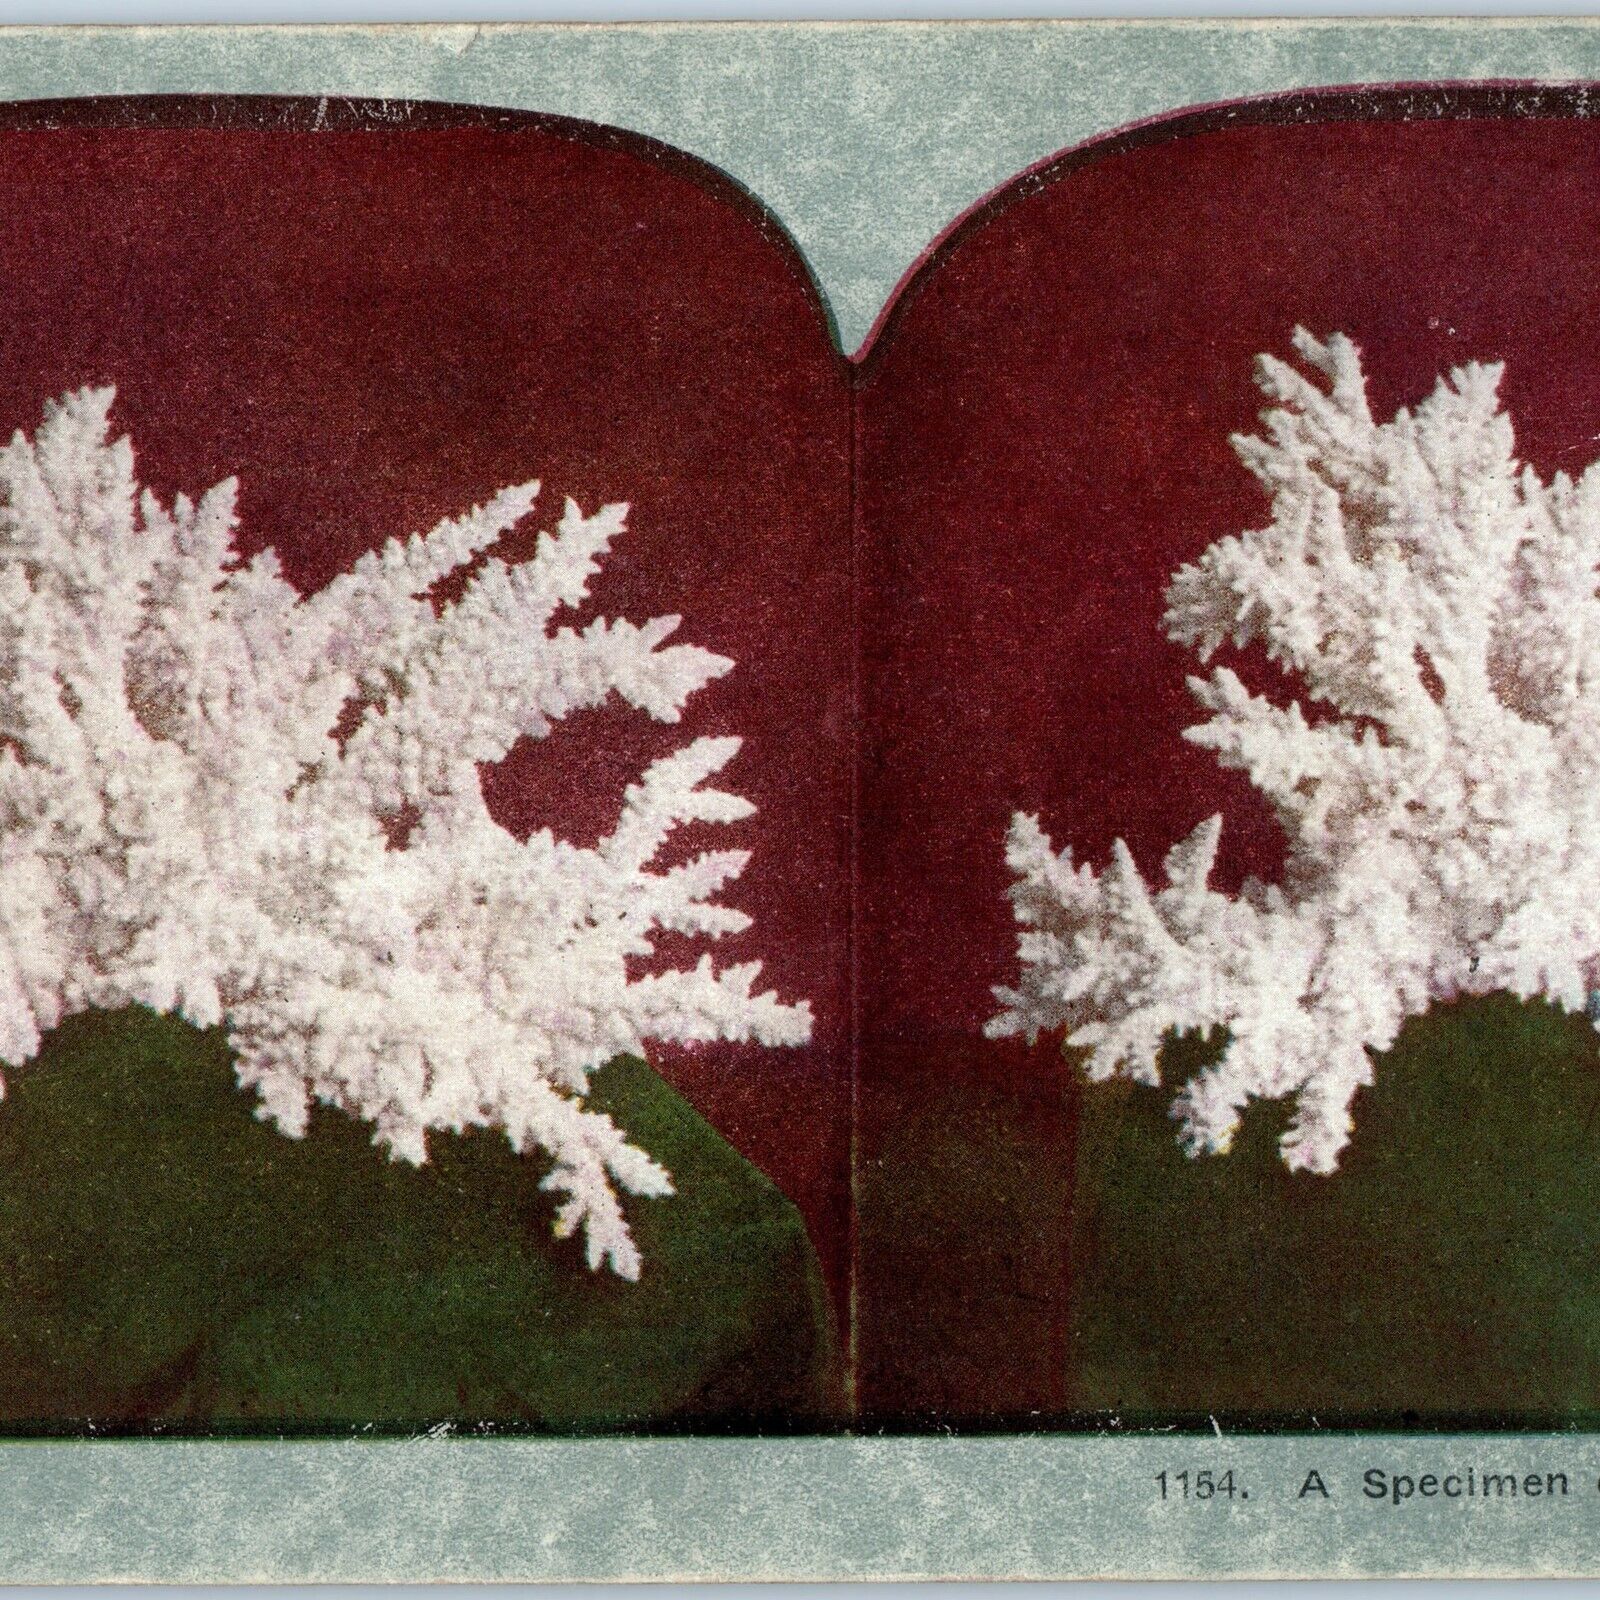 c1900s Specimen of Rose Coral Nature Educational Stereoview Rare Ocean Life V37